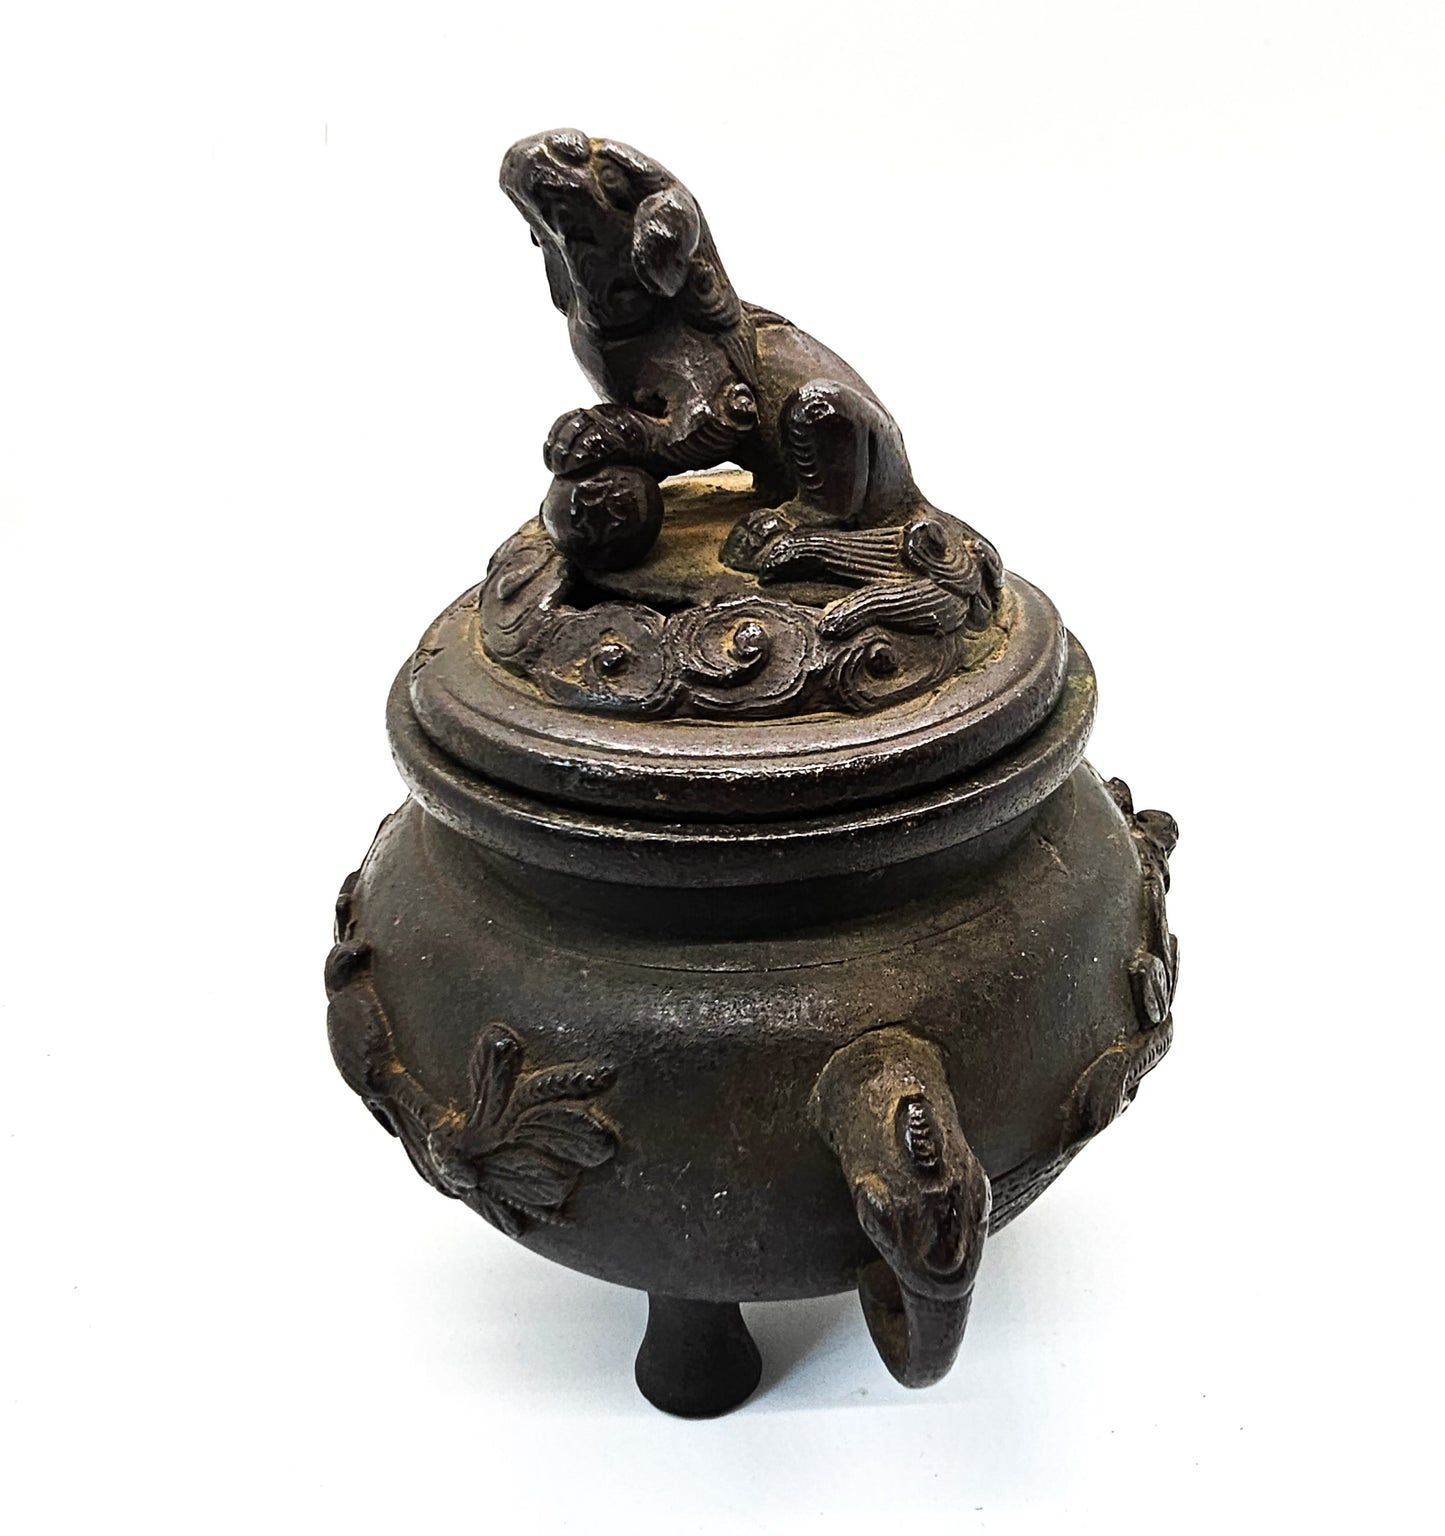 Bronze foo dog and bird antique early 20th century censer incense burner